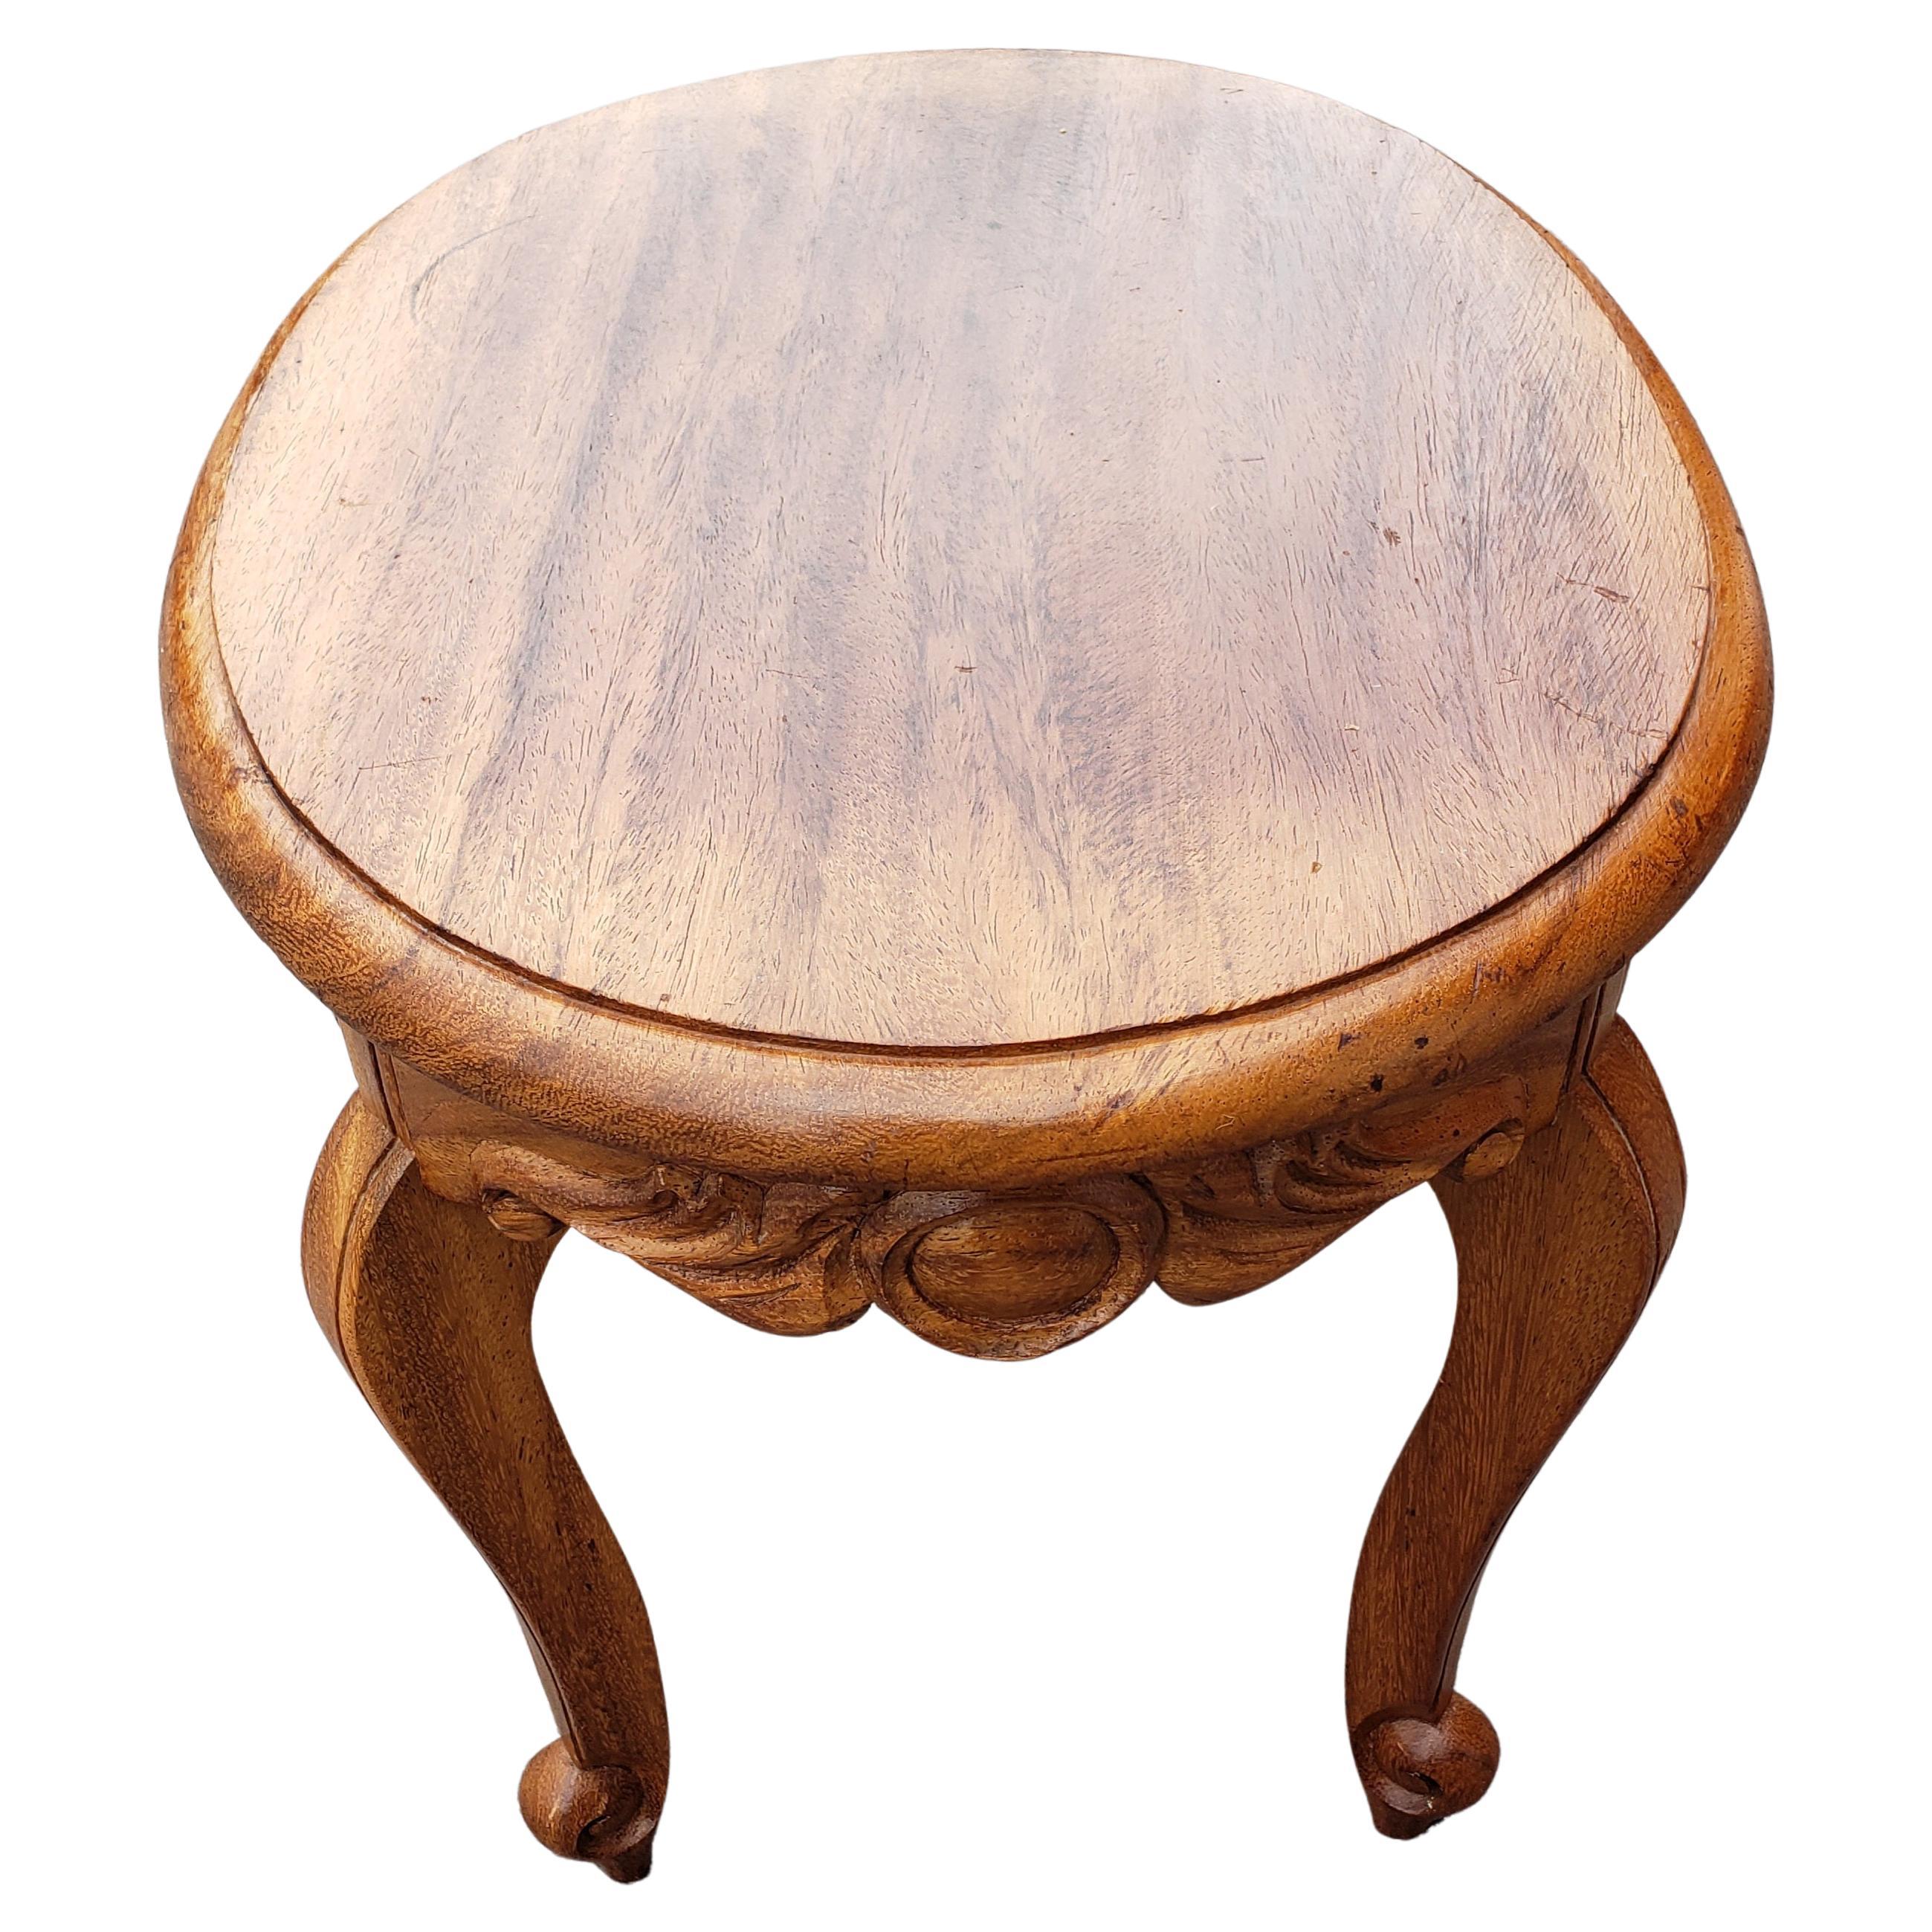 red oak wood furniture